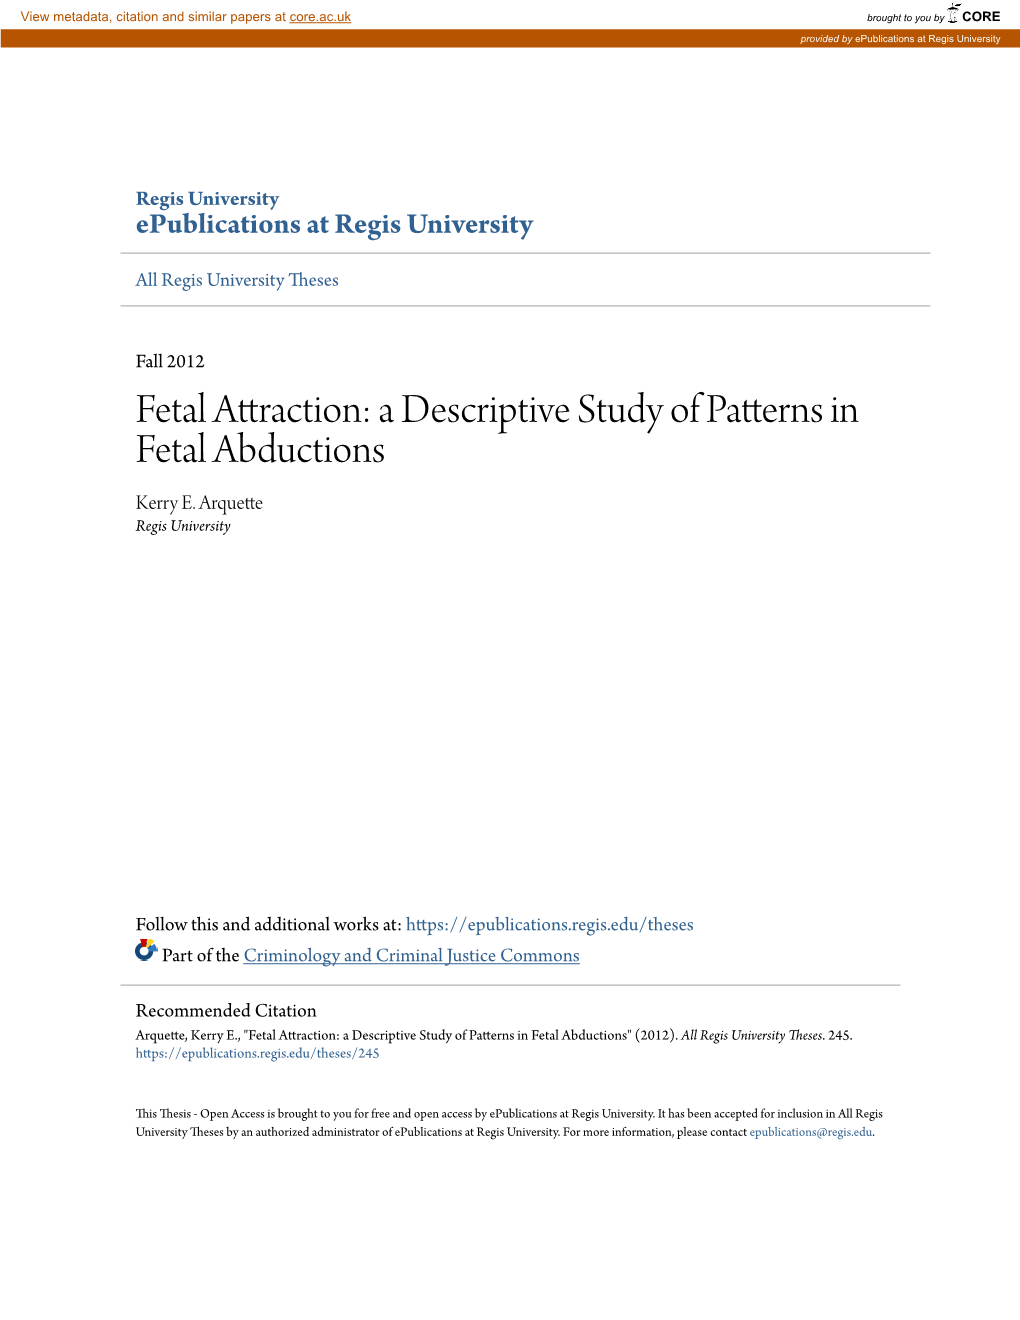 Fetal Attraction: a Descriptive Study of Patterns in Fetal Abductions Kerry E